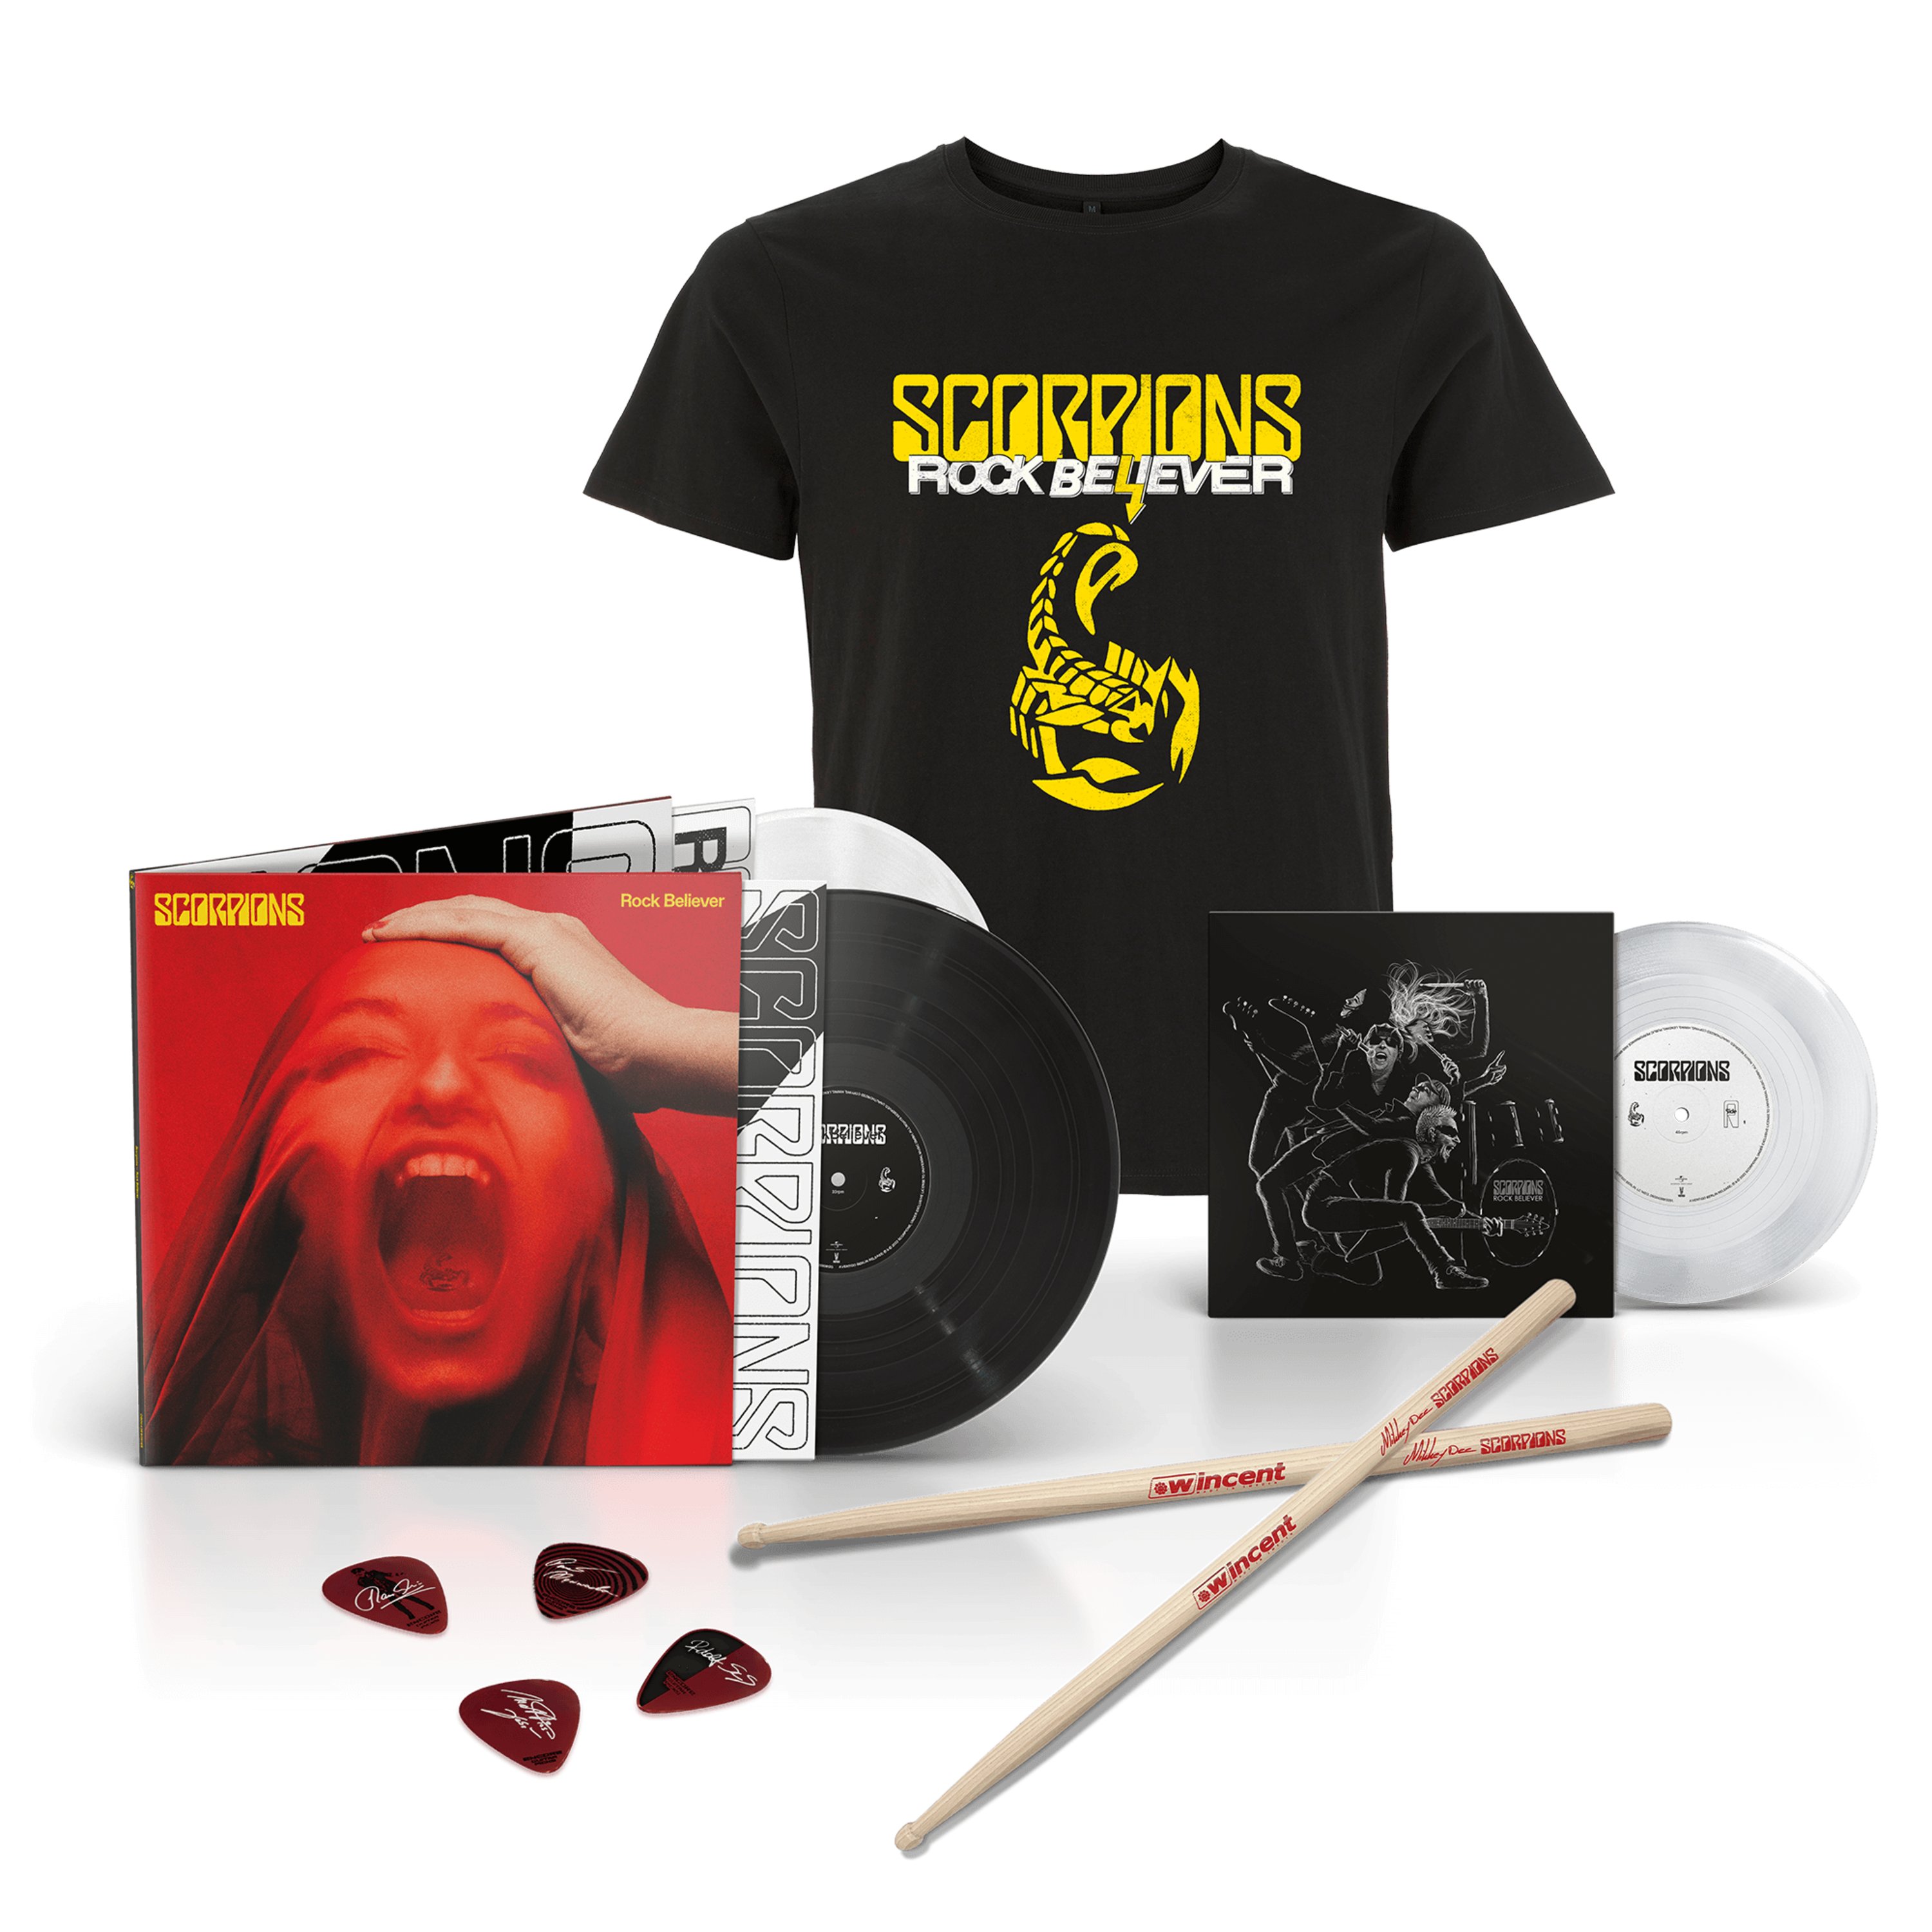 Rock Believer by Scorpions - Vinyl Bundle - shop now at Scorpions store